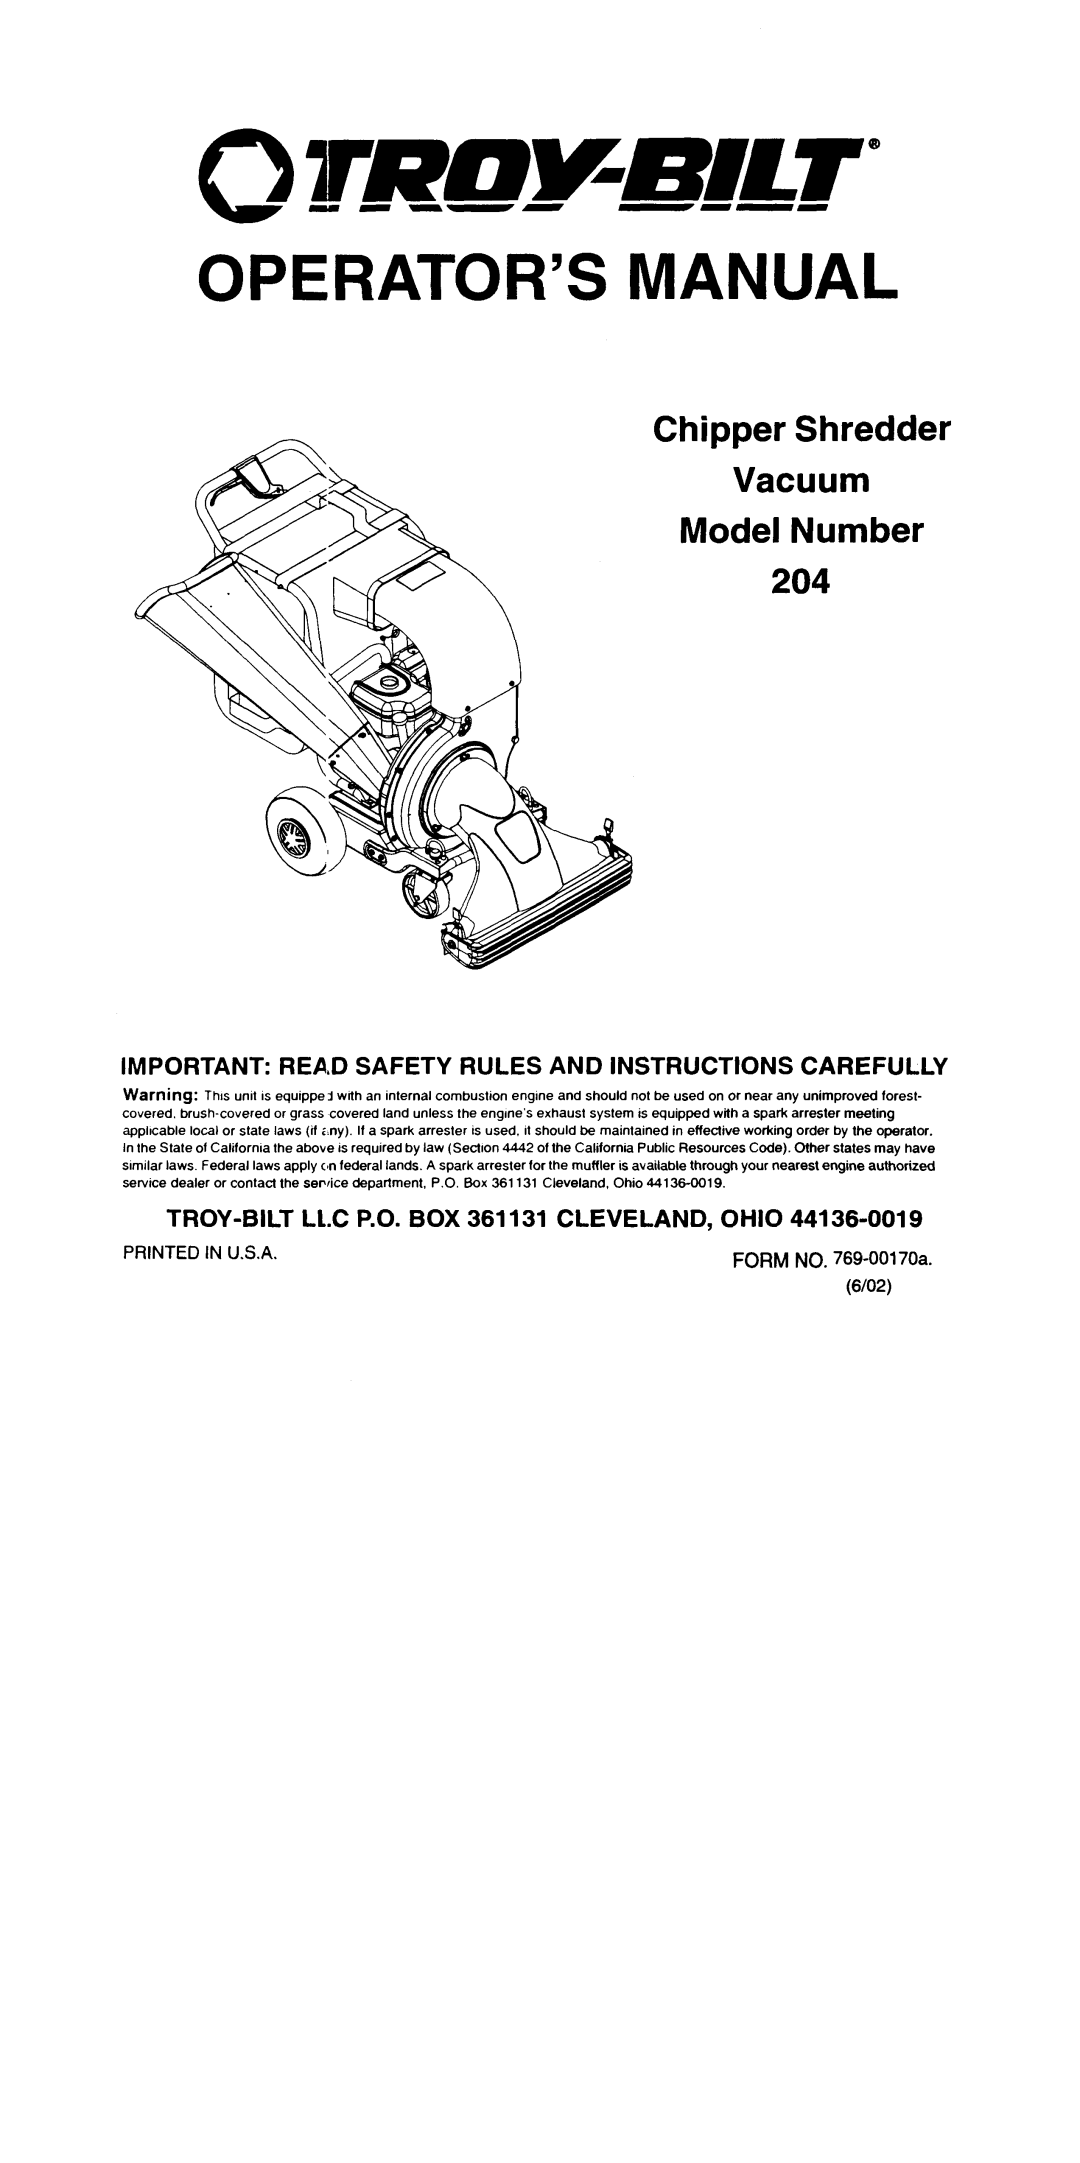 Troy-Bilt 204 warranty Operator’S Manual, Chipper Shredder Vacuum - Model, TROY BILT LLC, P.O. BOX 361131 CLEVELAND, OHIO 